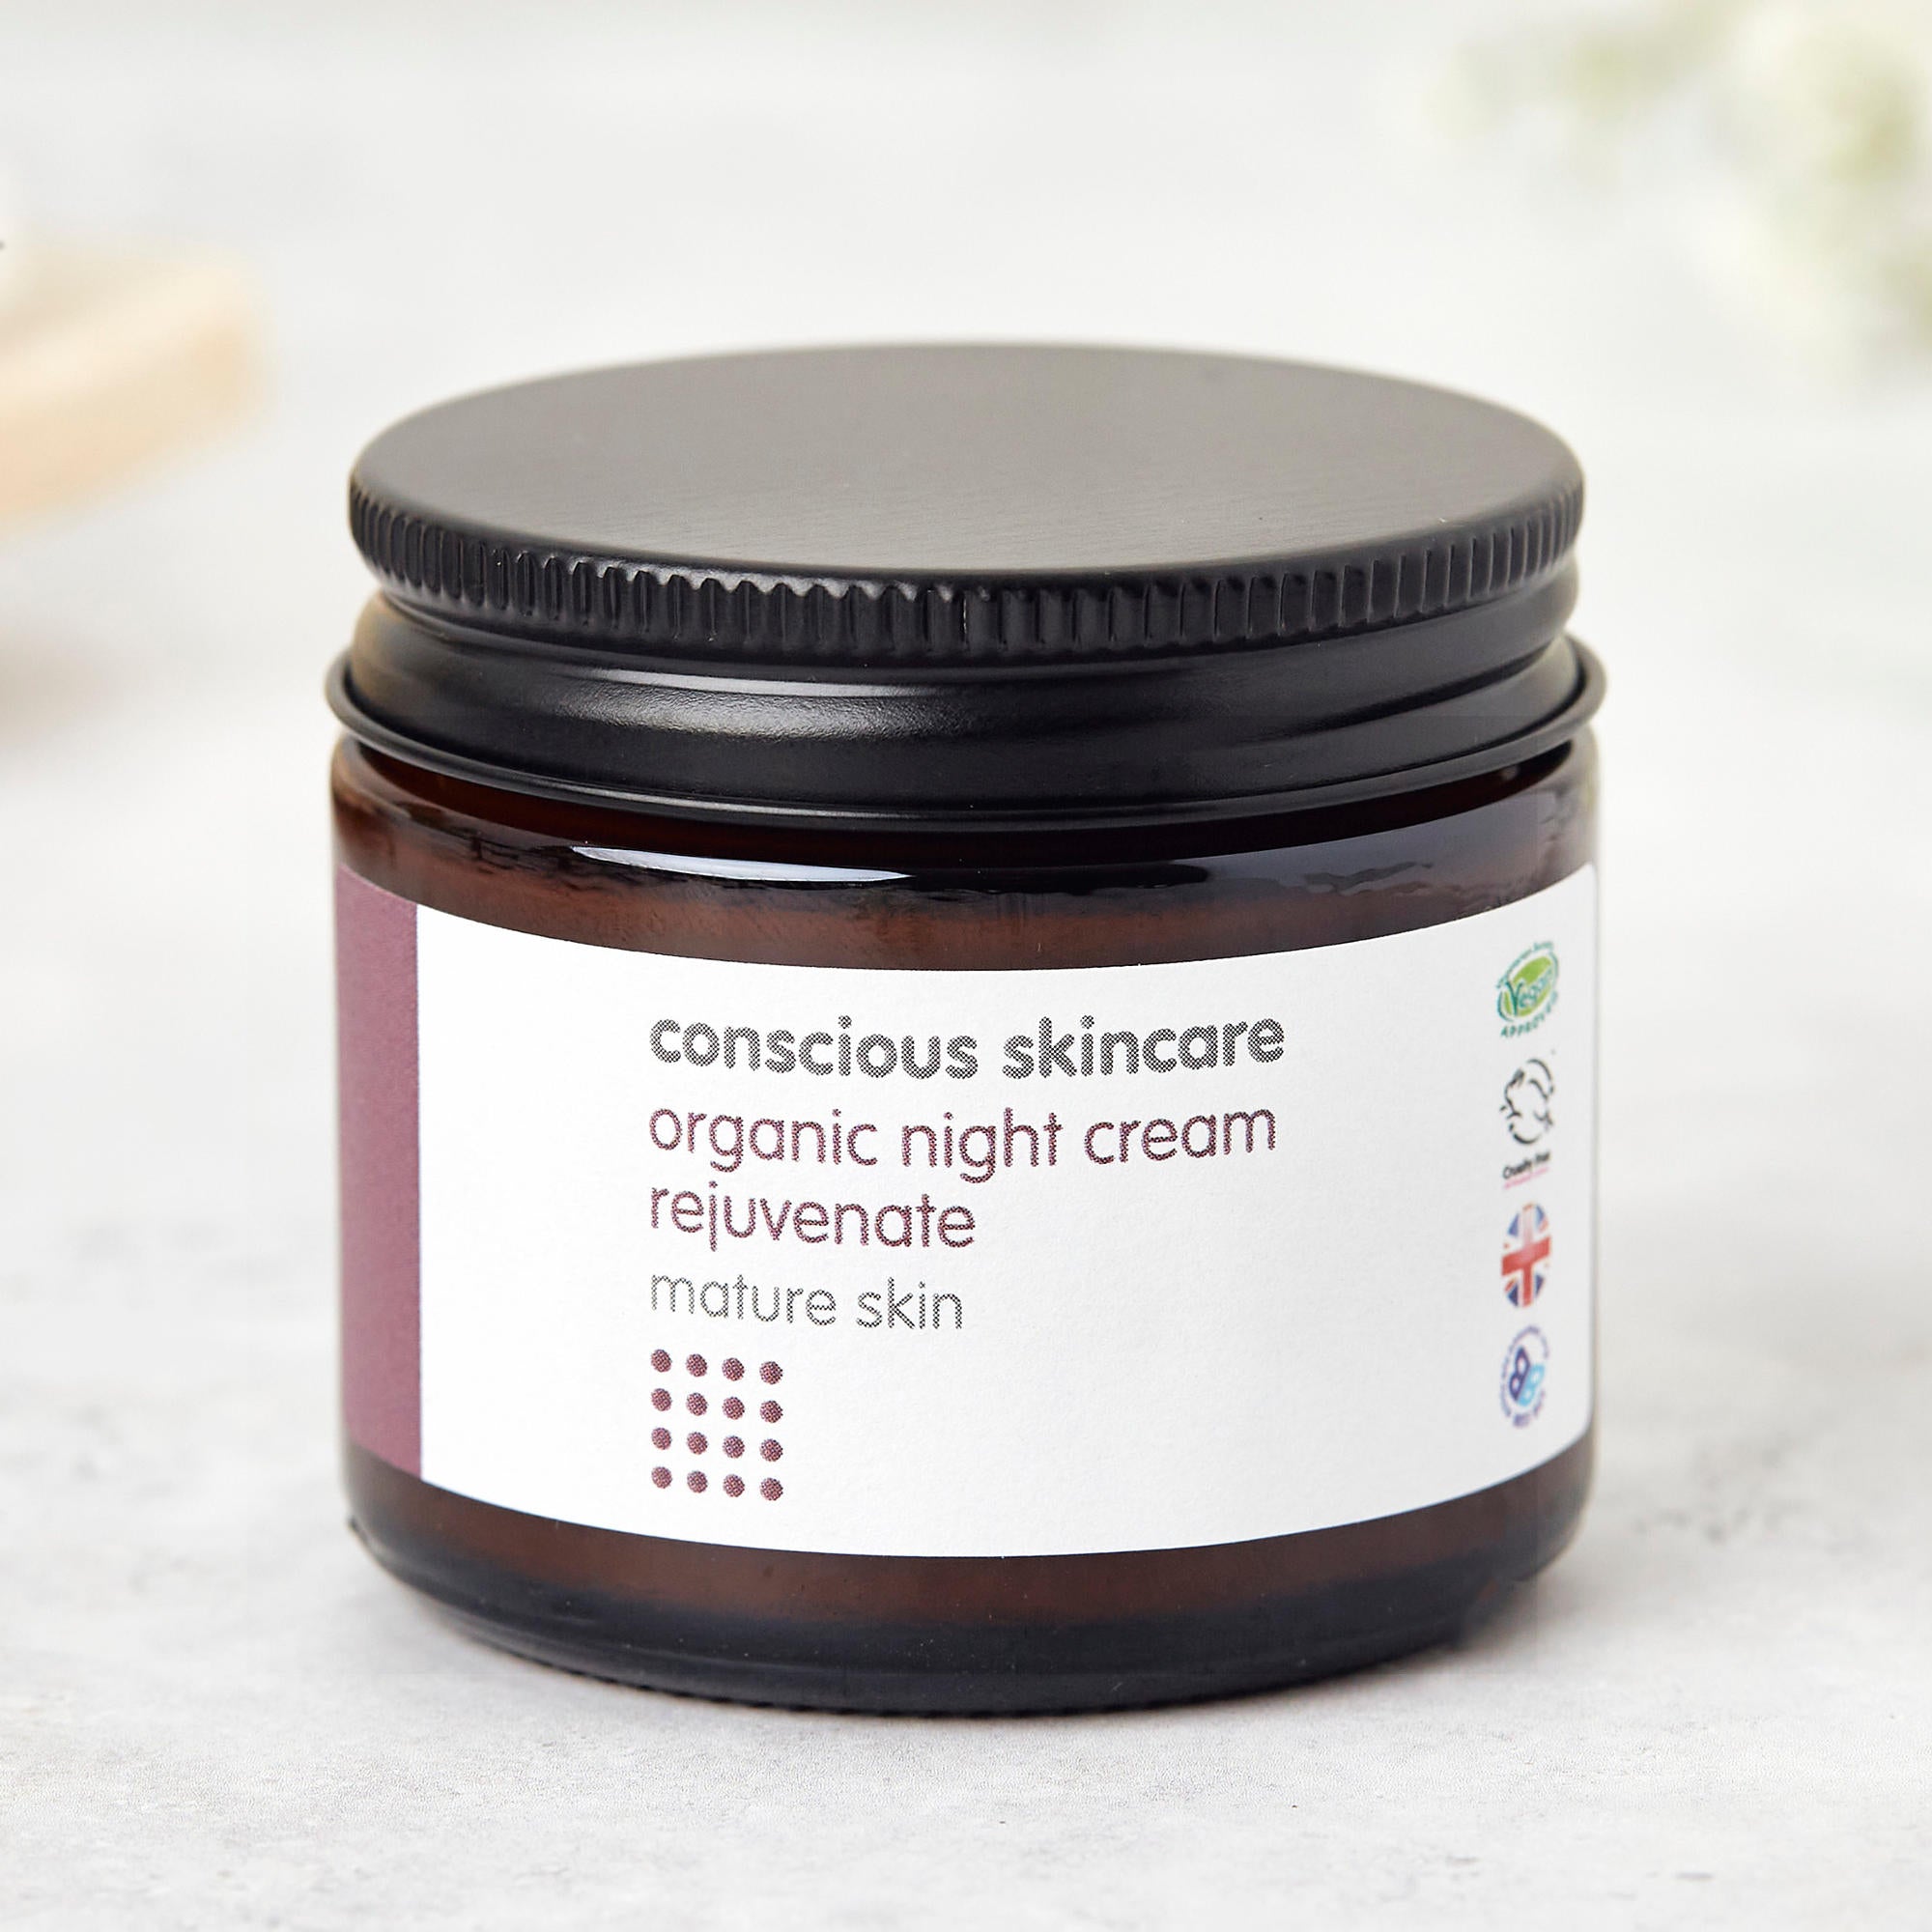 rejuvenate night cream - menopause cream in amber glass jar with black lid